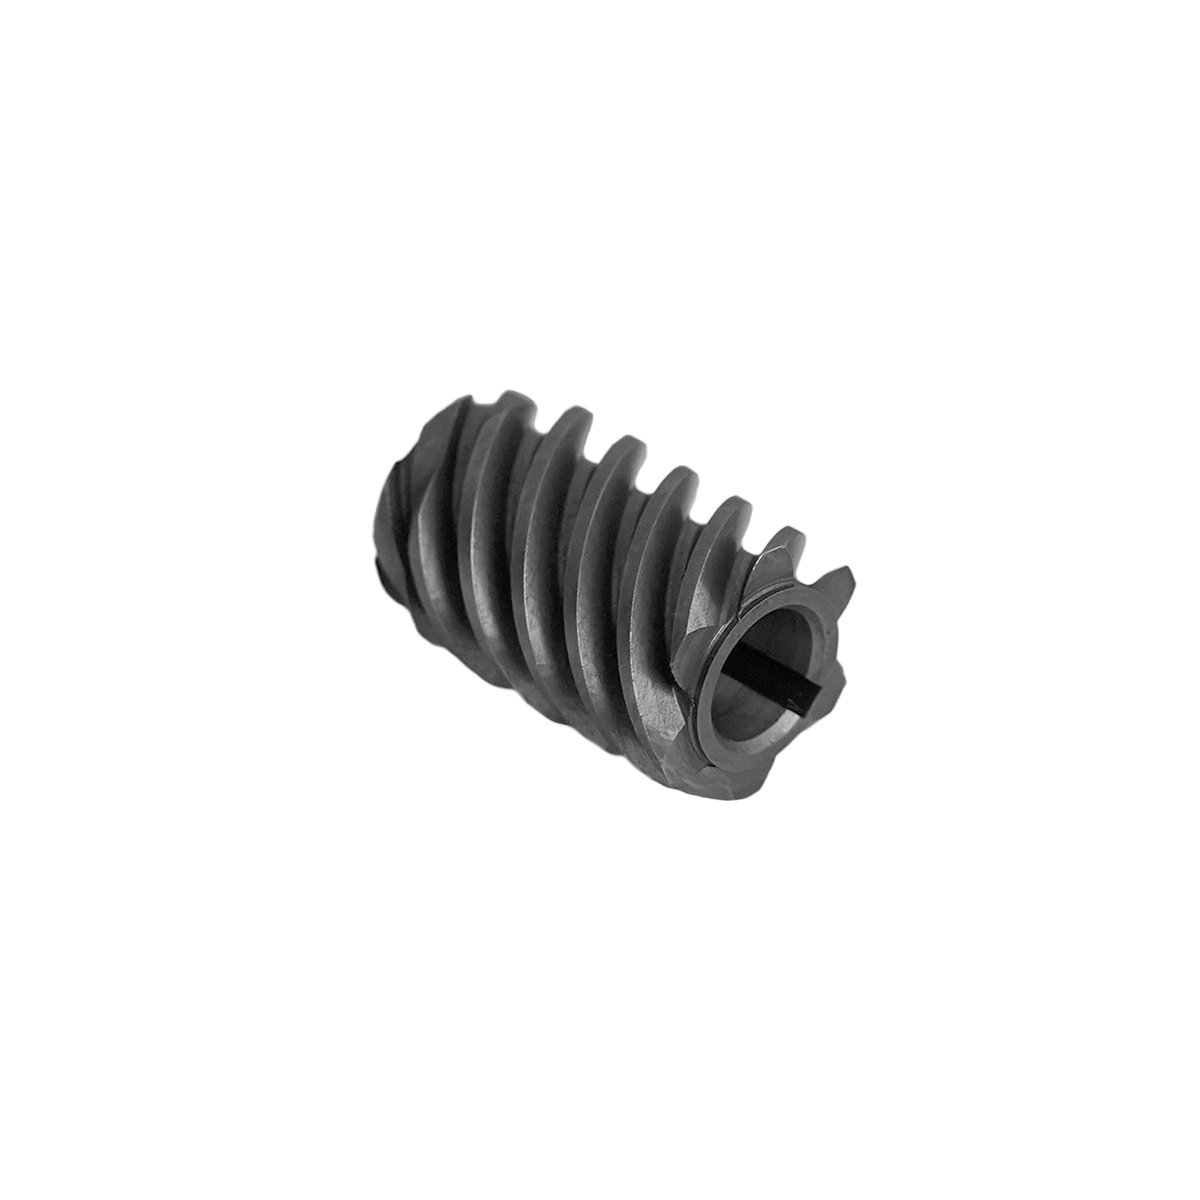 Motor Worm Gear for GLOBE Slicers OEM # 4100020-S